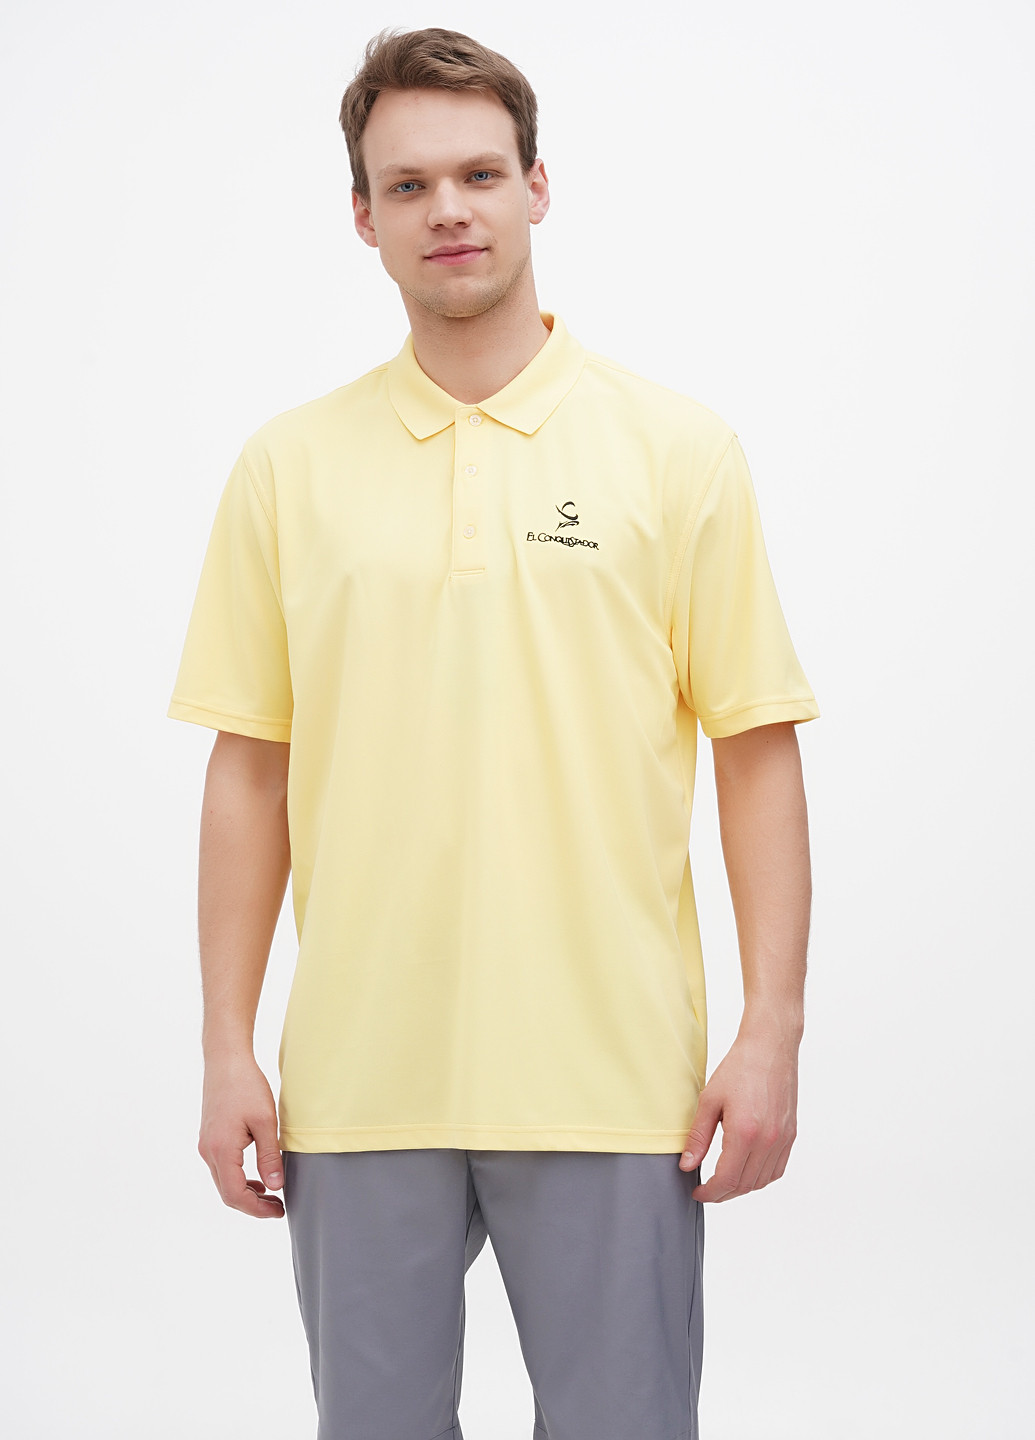 Желтая футболка-поло для мужчин Greg Norman однотонная